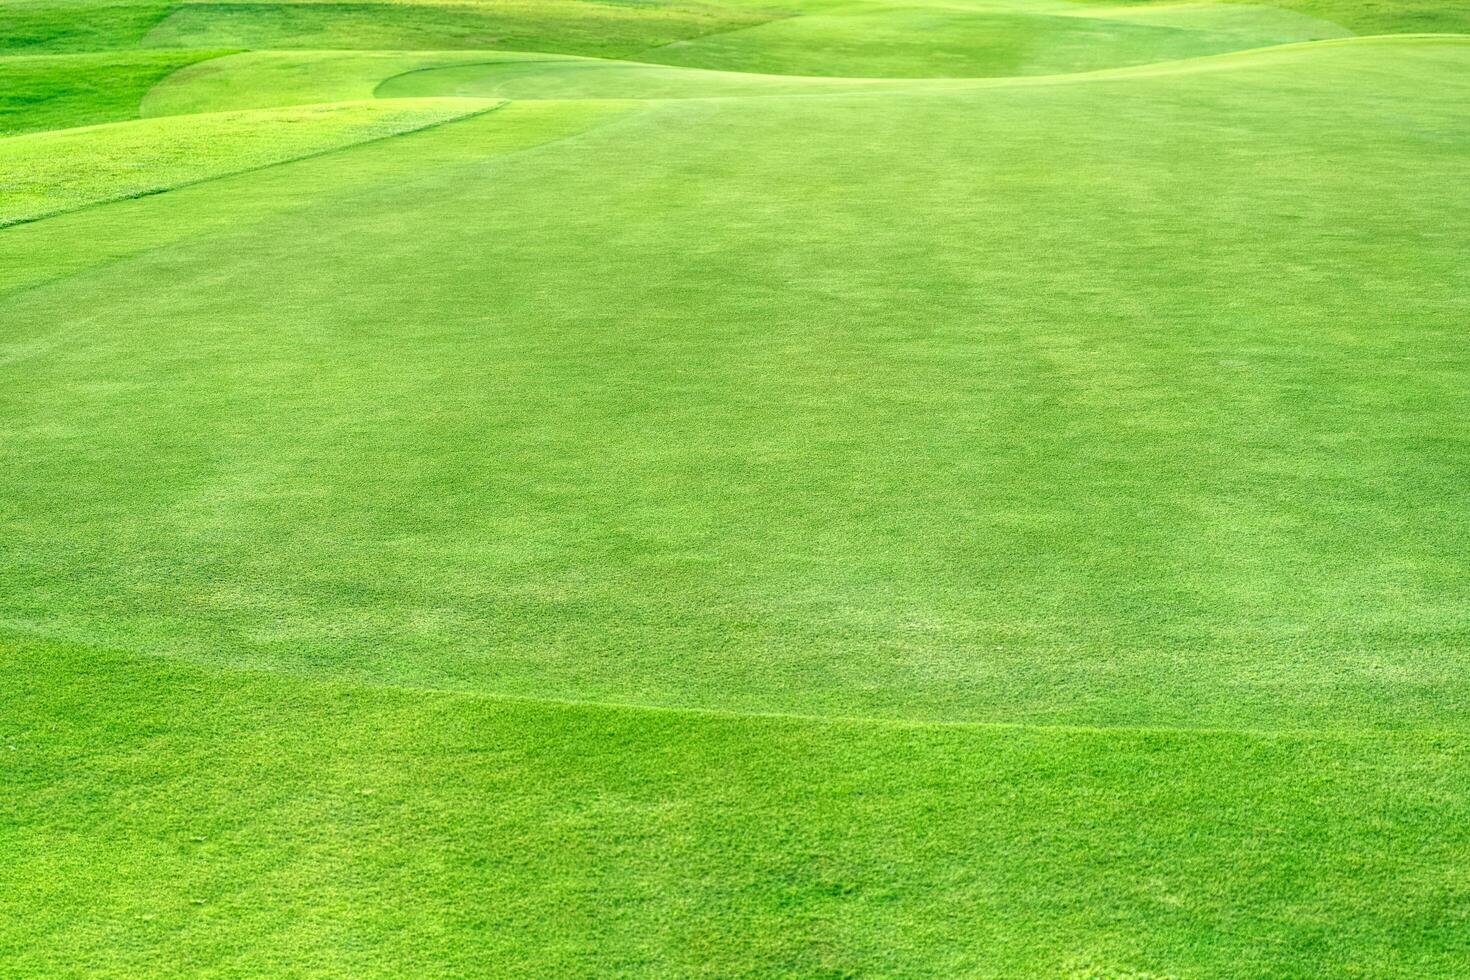 schön Golf Kurs Sicht, Golf Kurs mit schön Putten Grün, frisch Grün Gras auf das Golf Kurs foto